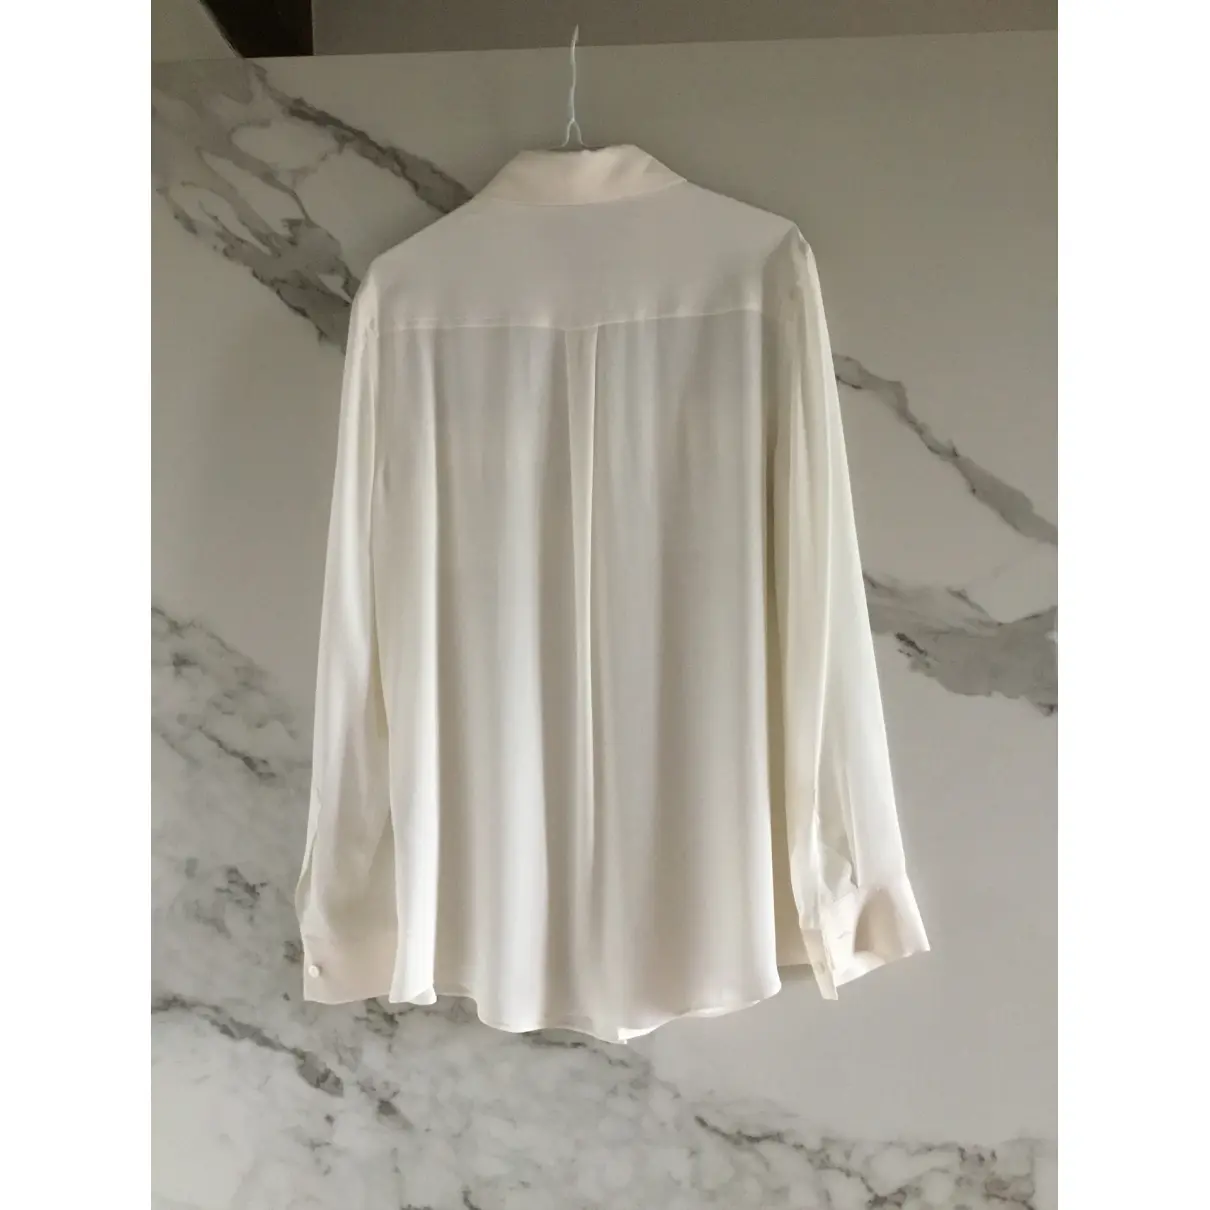 Buy Liviana Conti Silk blouse online